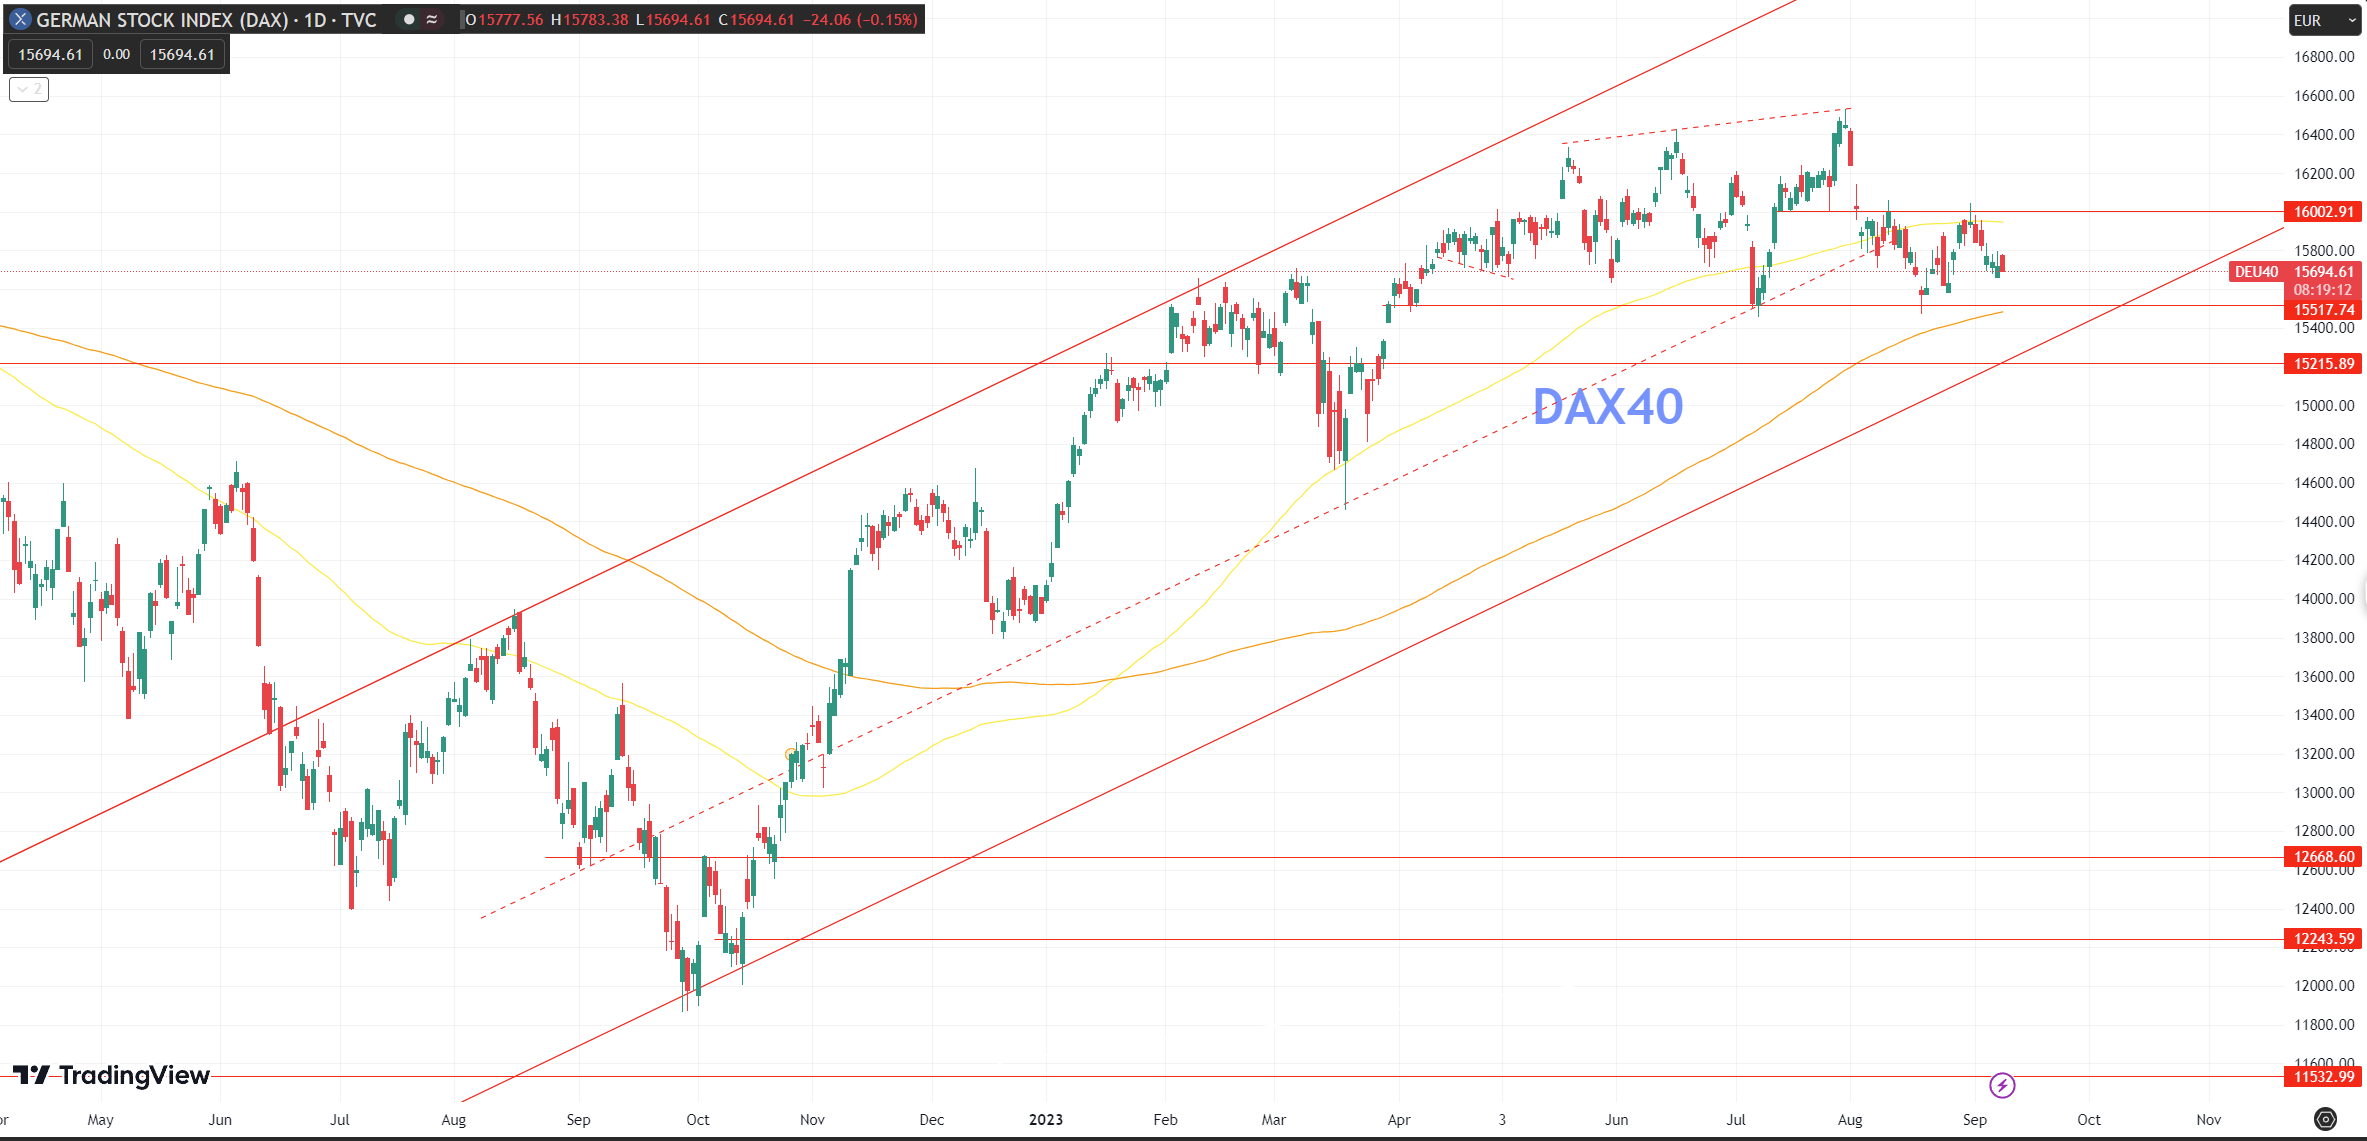 Dax40 Daily Analysis- September 2023